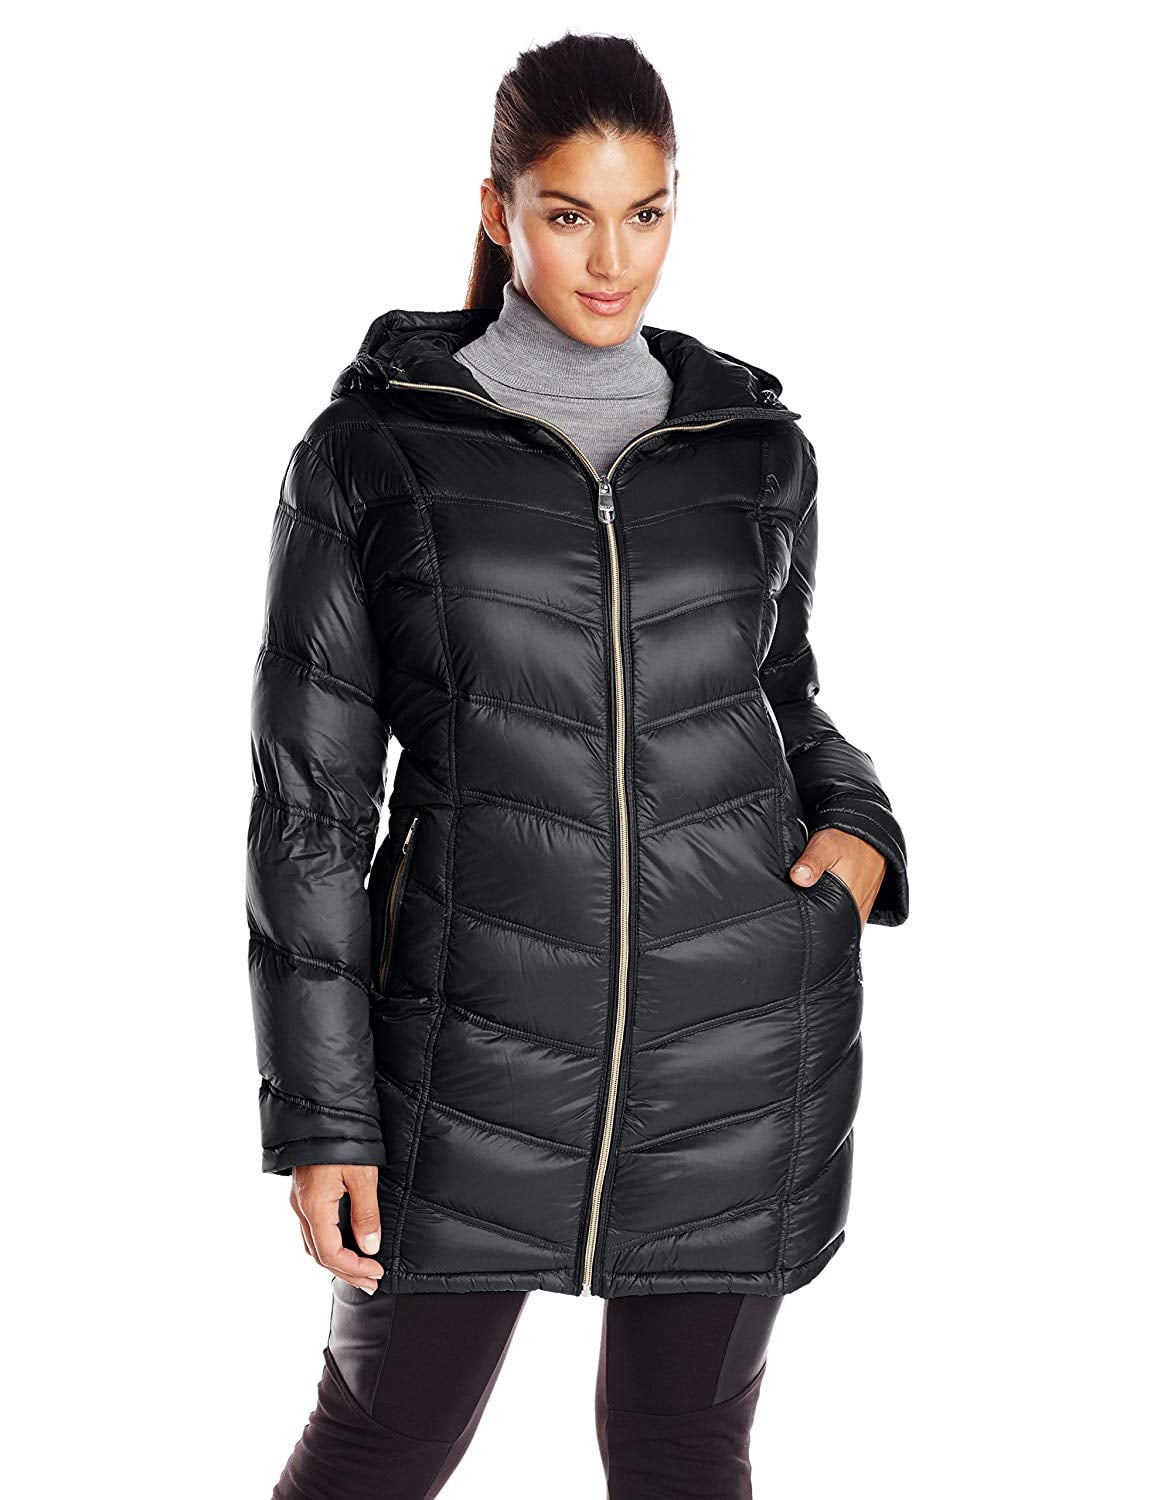 telex Beschuldiging slinger Calvin Klein Packable Down Coat | Amazon's 16 Best Coats to Flatter Your  Curves (Including Oprah Winfrey's Favorite!) | POPSUGAR Fashion Photo 15